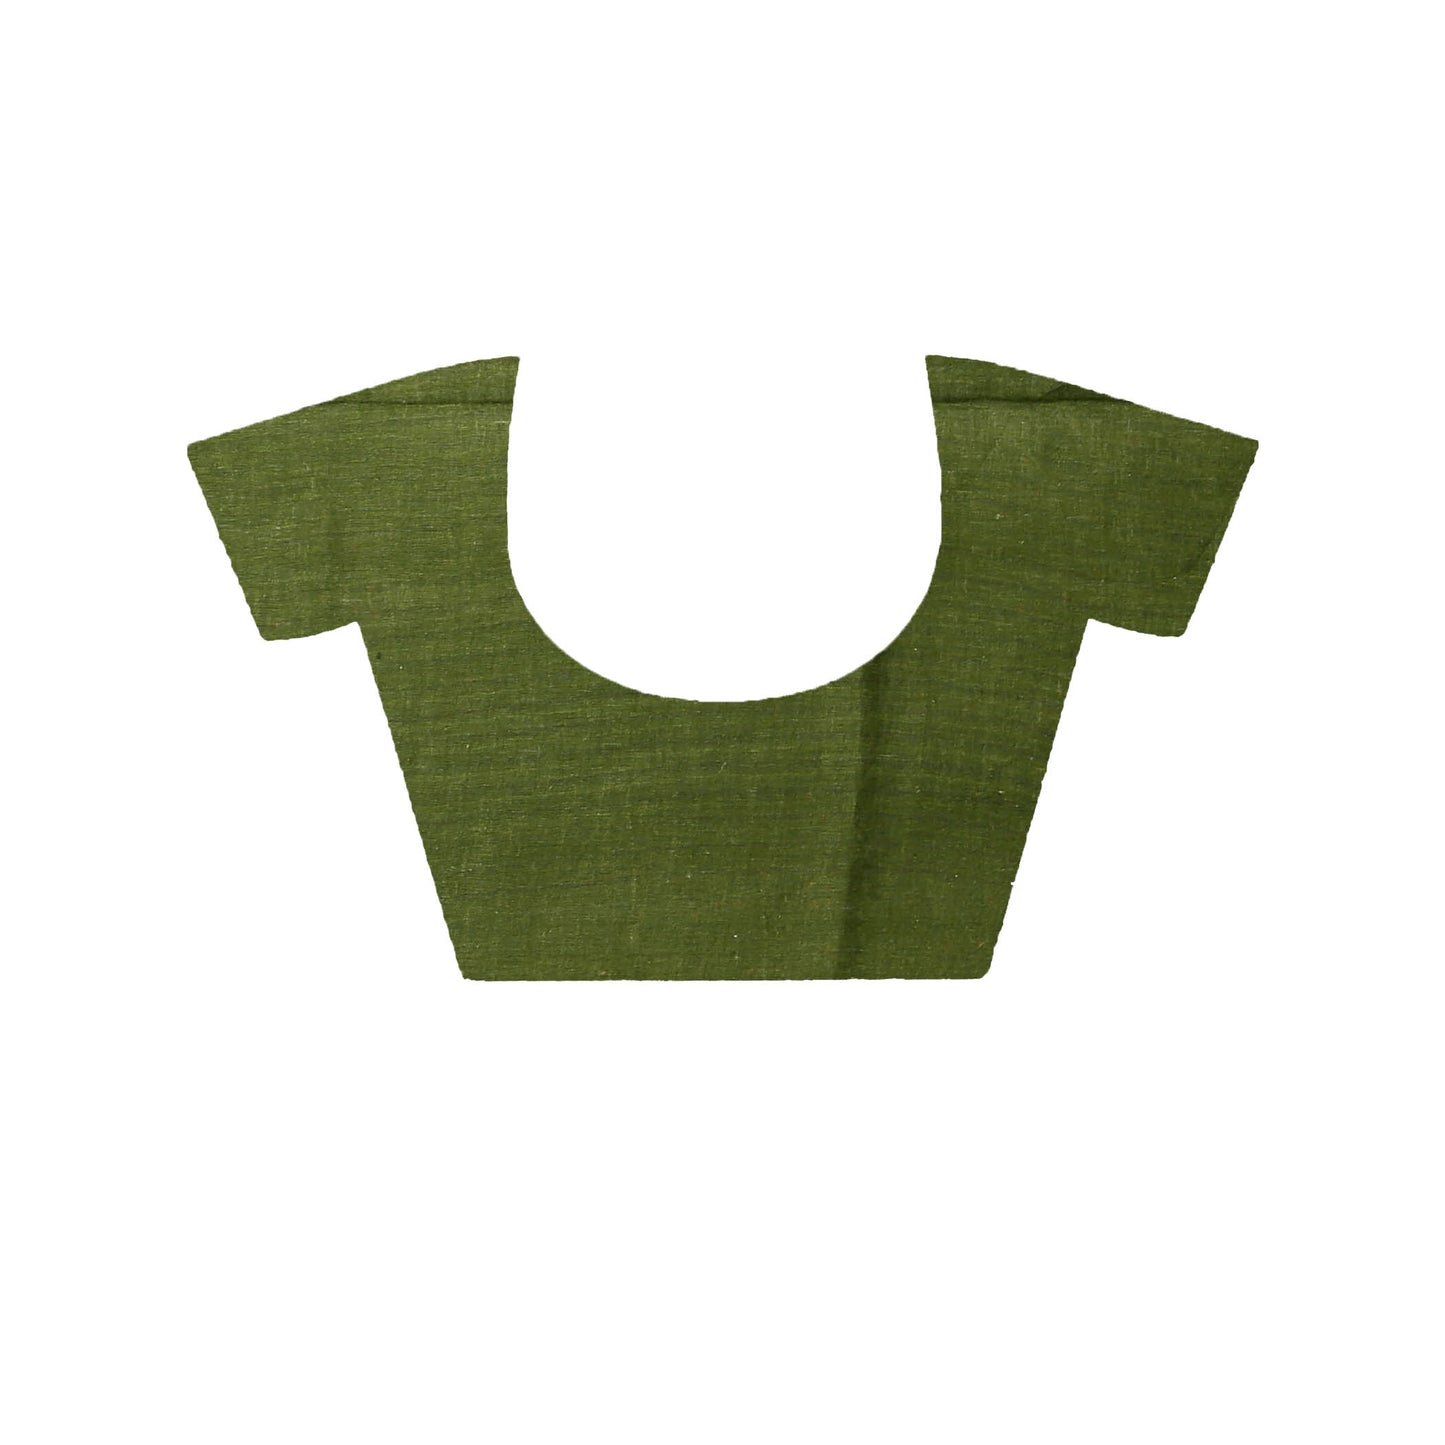 Gredient green digitally printed linen saree